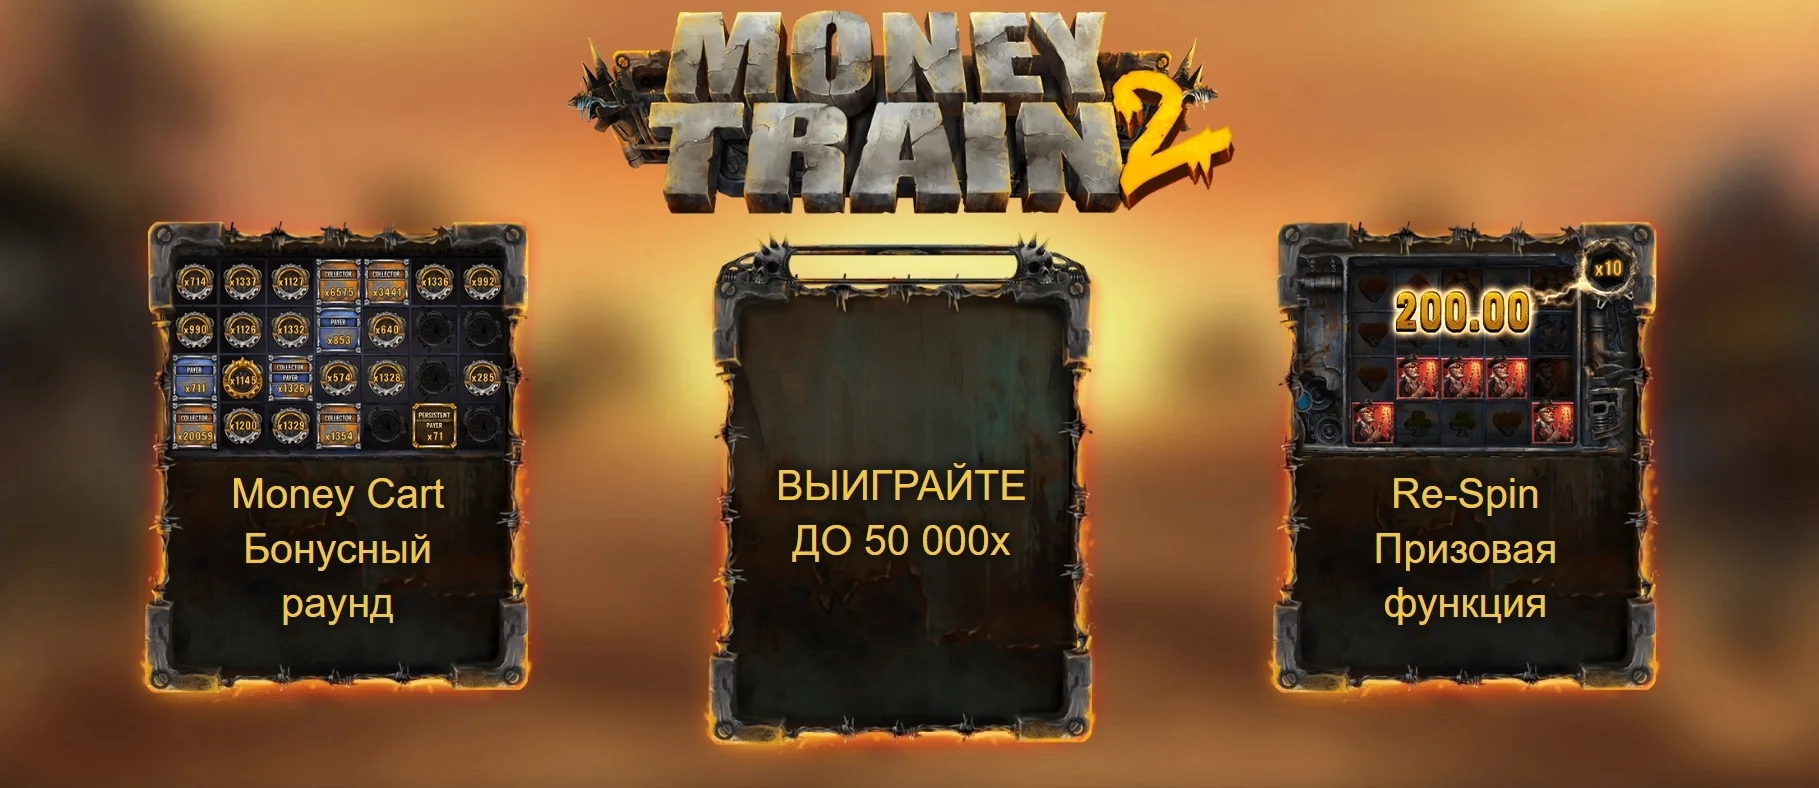 Money Train 2 в 1 win казино